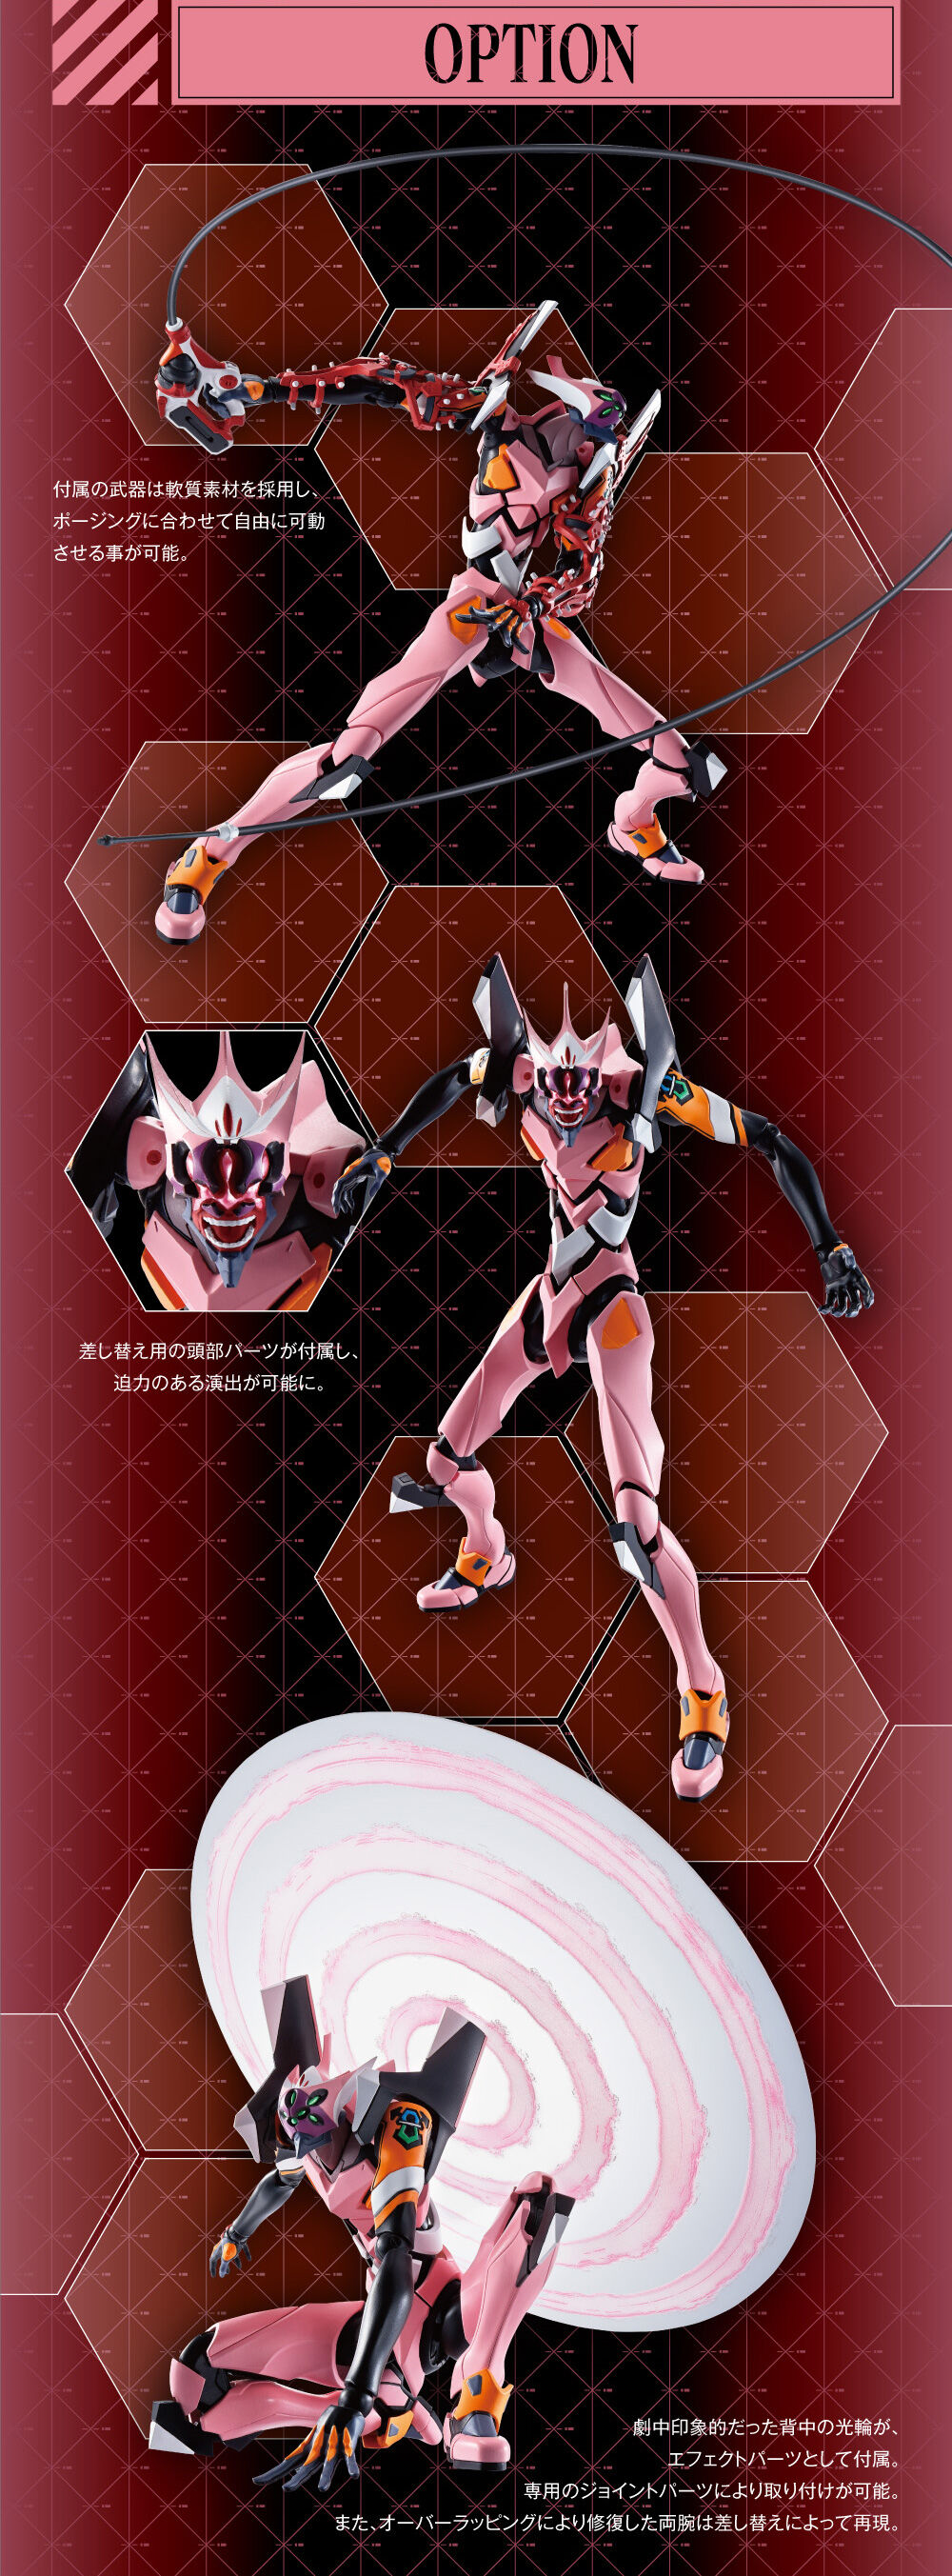 Robot Spirit Side Eva Evangelion Kai Unit 8 G Gamma Premium Bandai